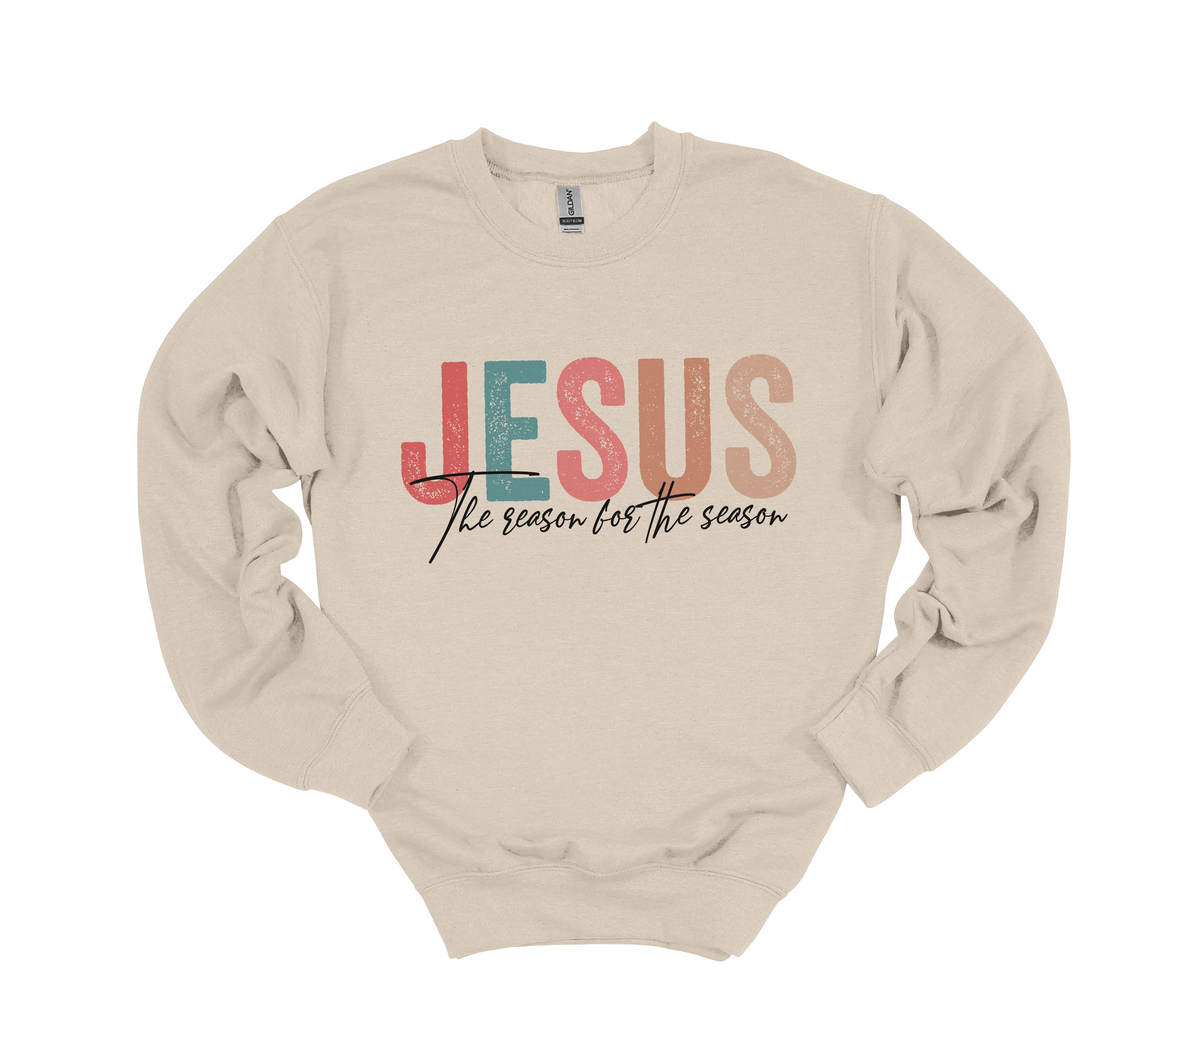 Jesus-The Reason for the Season